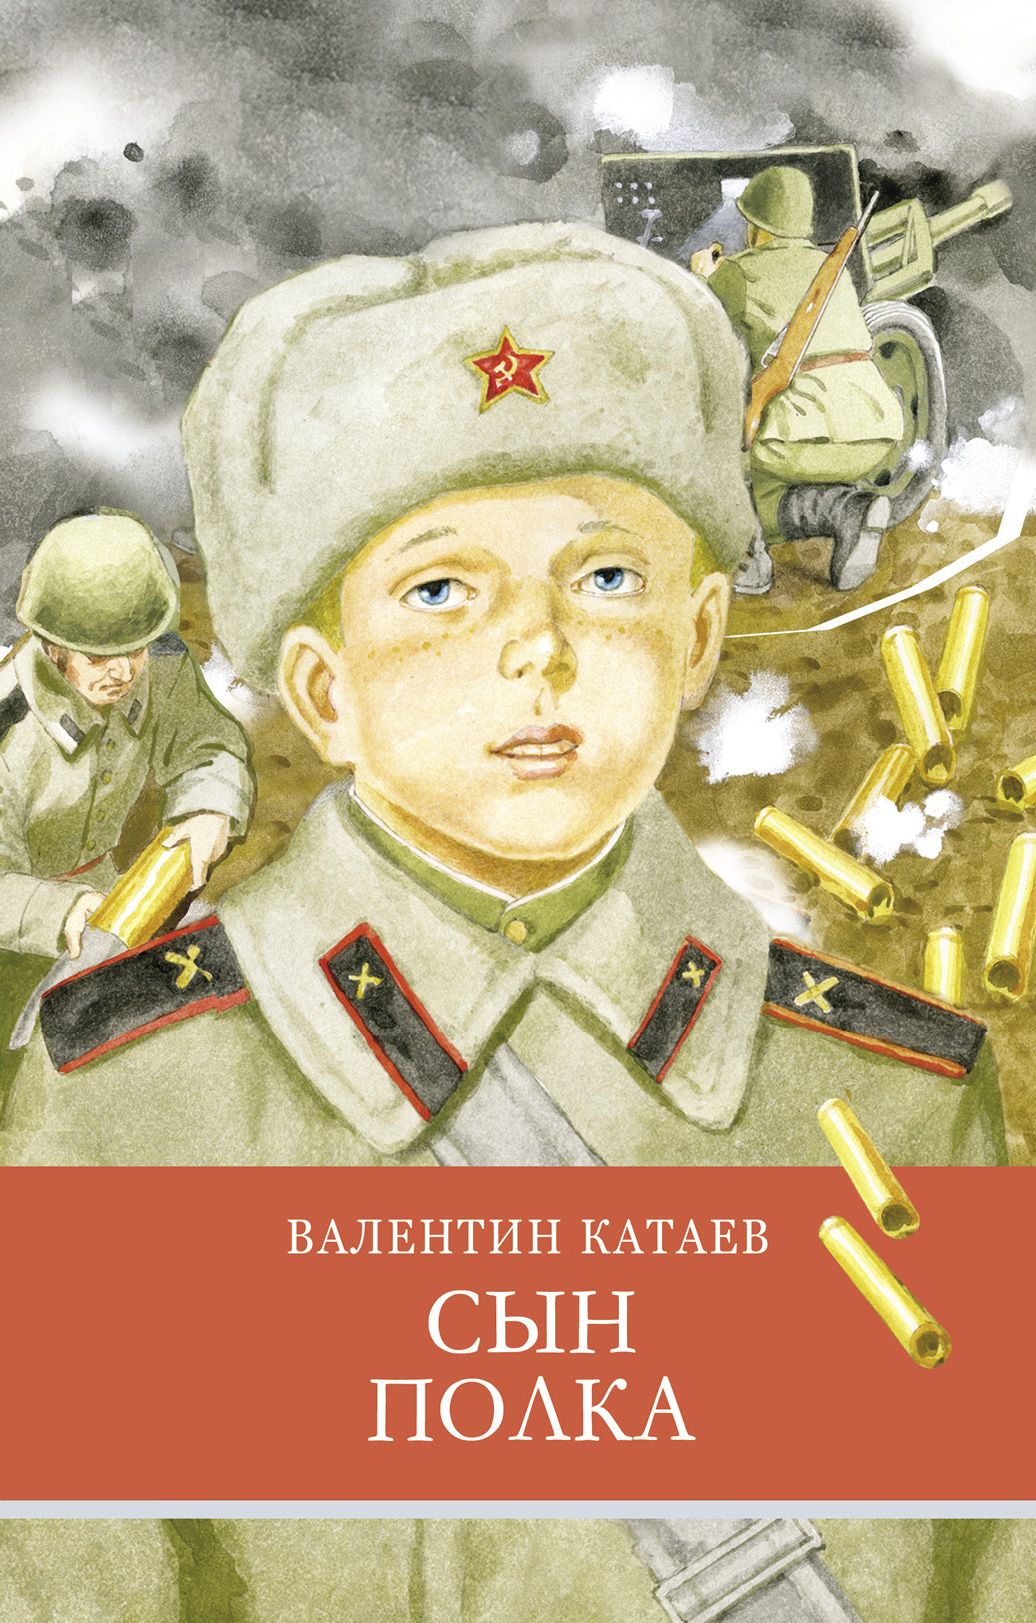 Название произведения сын полка. В. Катаев "сын полка". Книга Катаева сын полка.